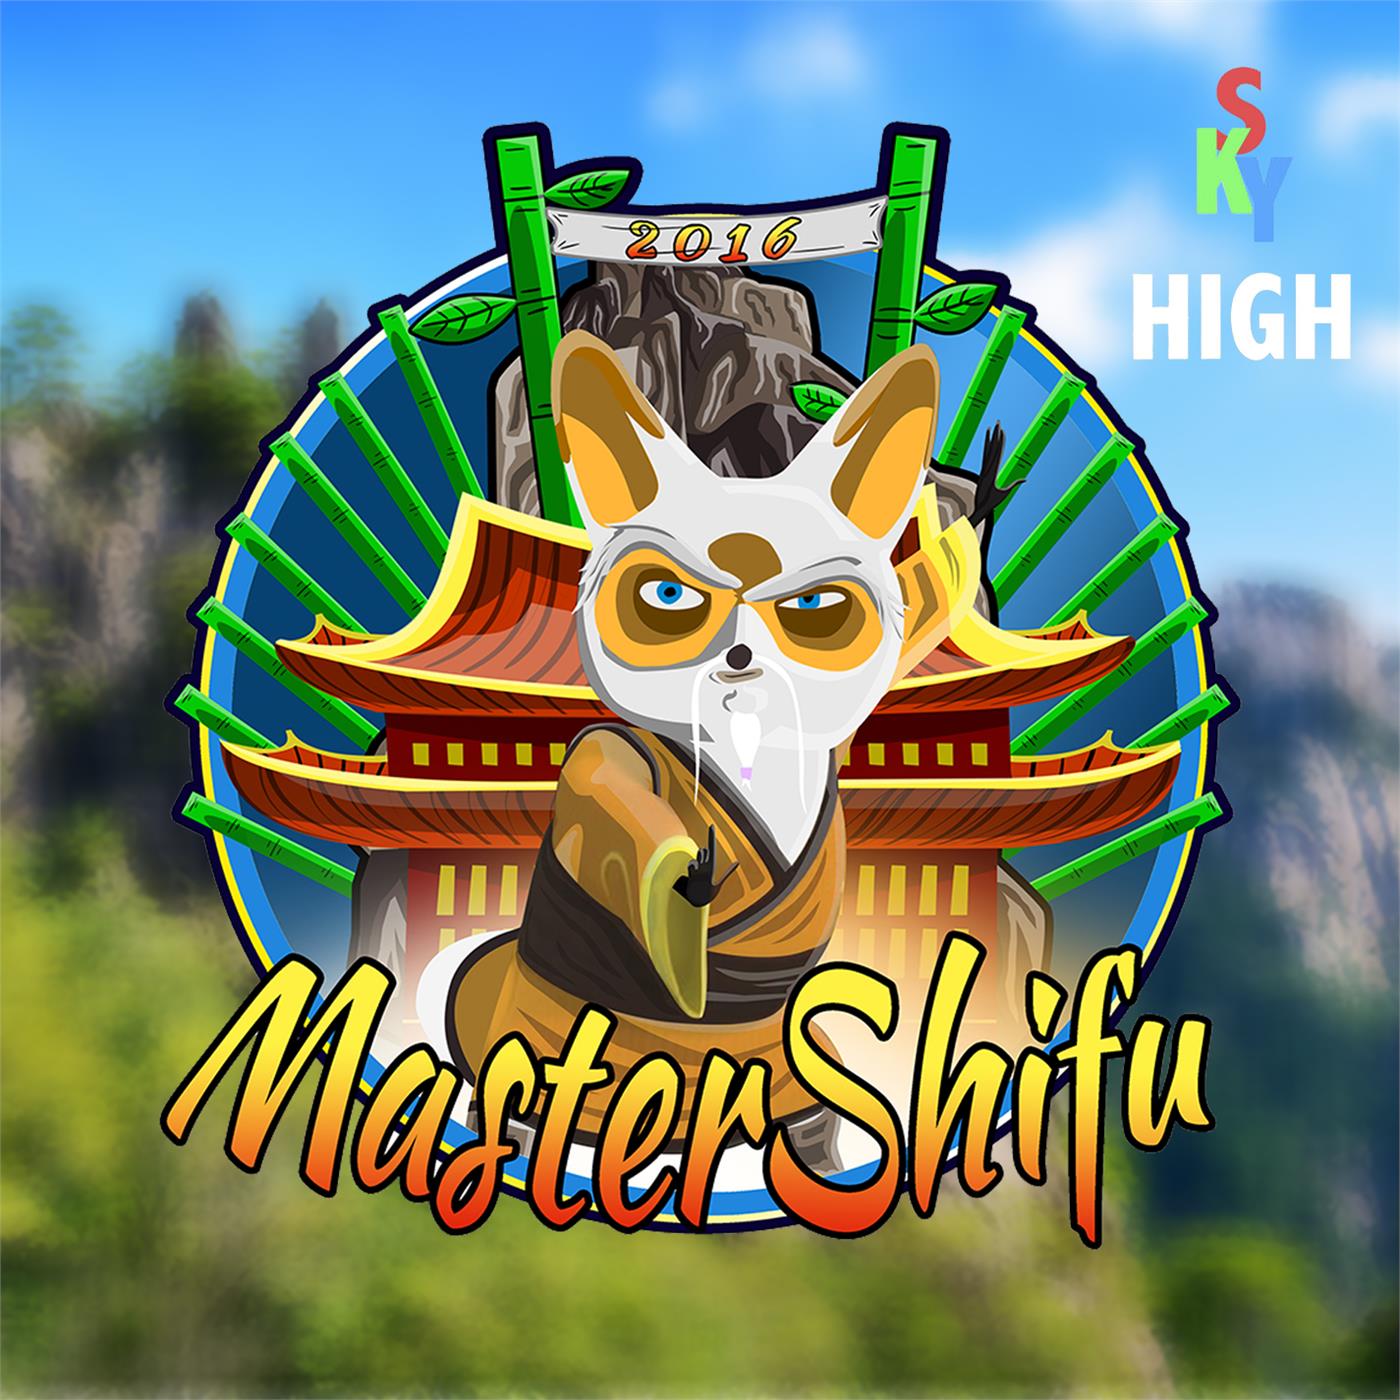 Master Shifu 2016